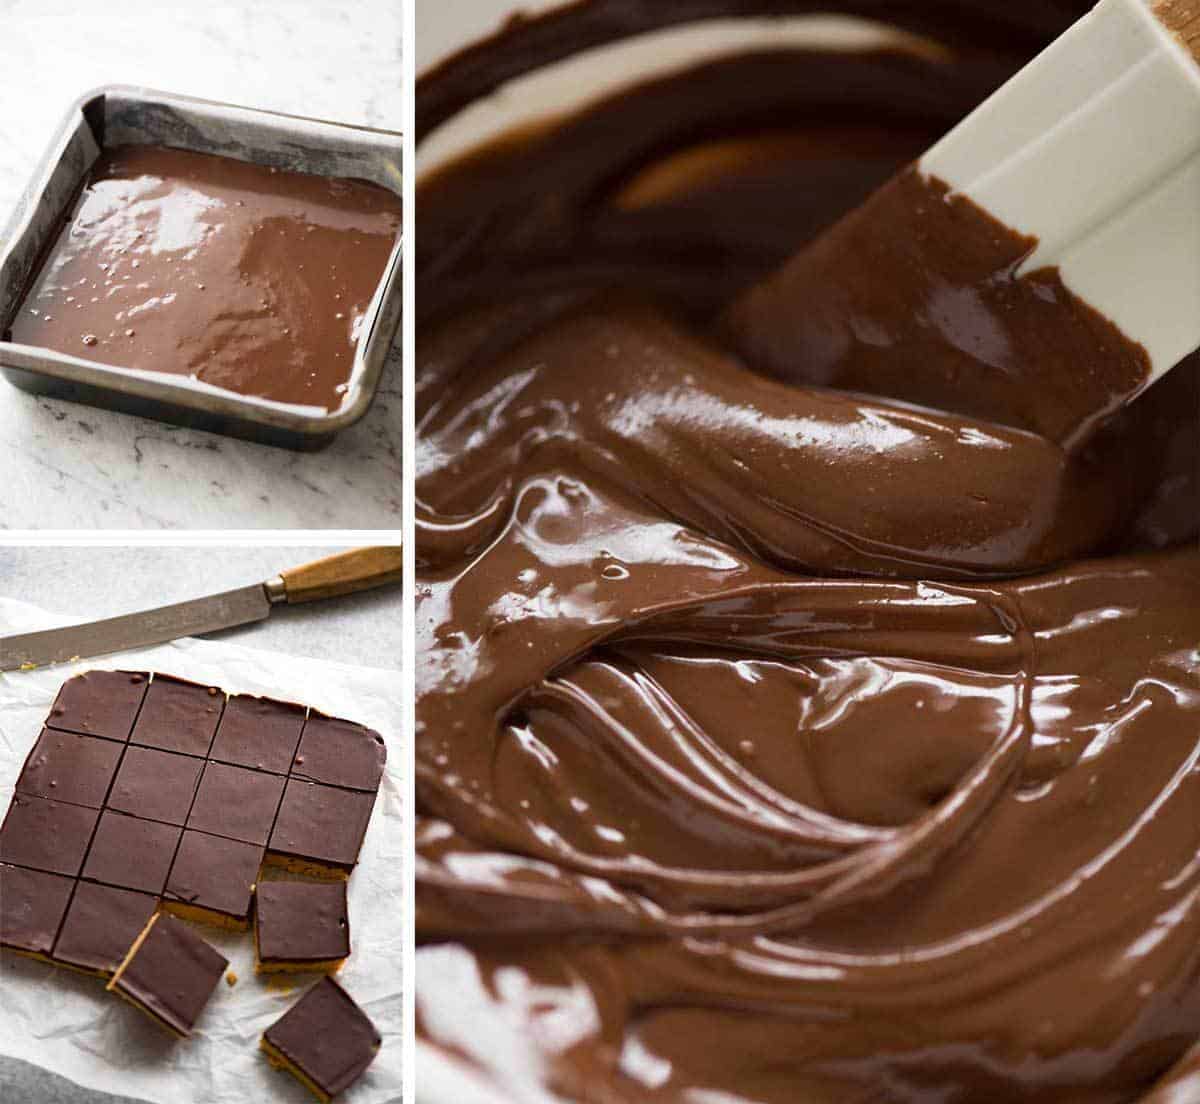 Preparation of No Bake Chocolate Peanut Butter Bars - the chocolate peanut butter topping